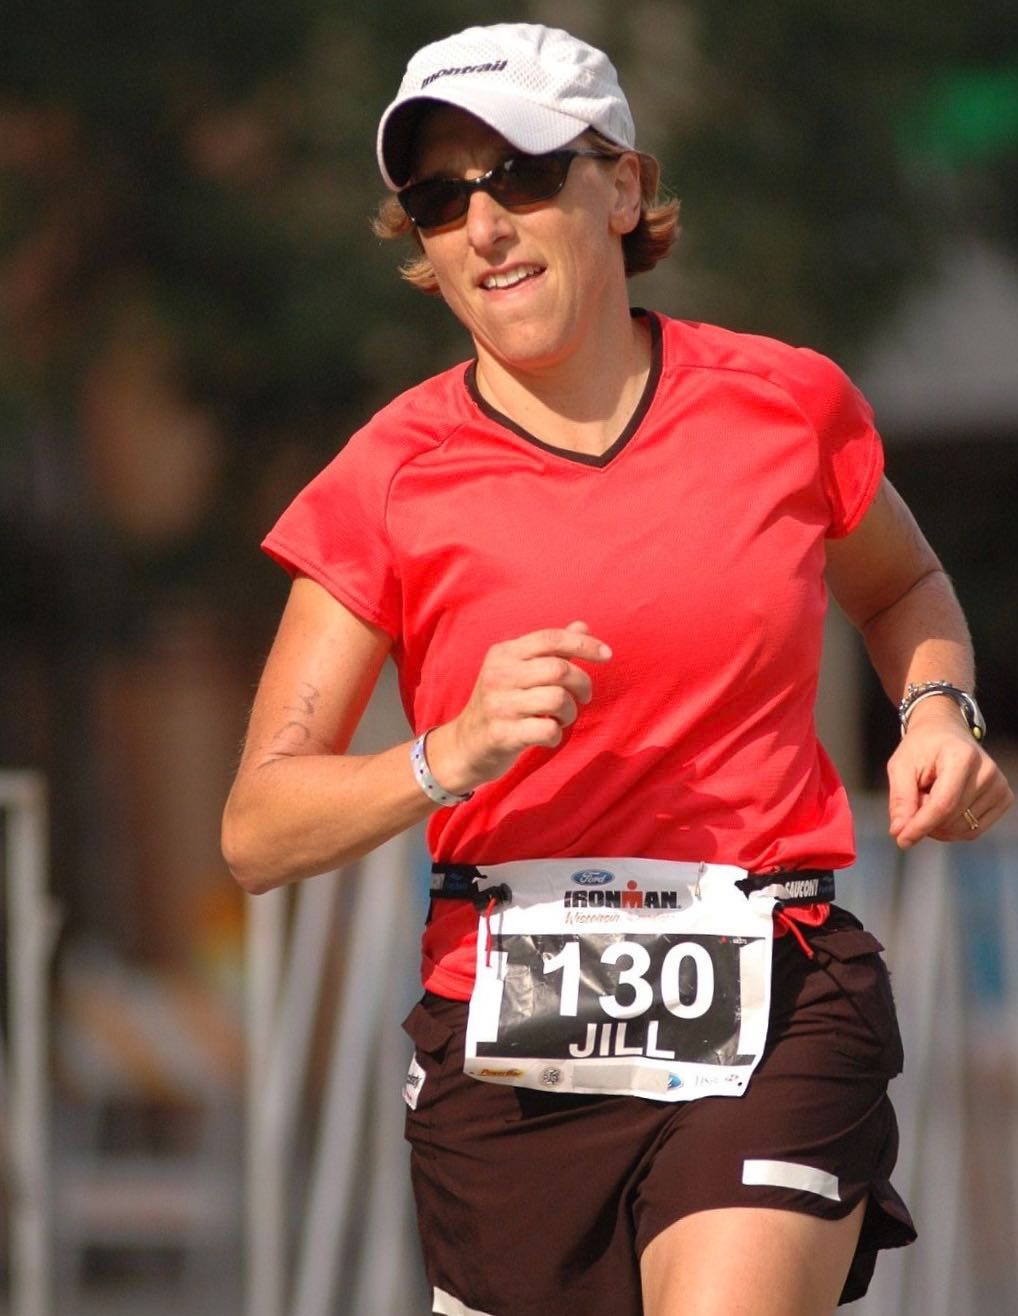 Ultra-runner, Supreme Court nominee: Jill Karofsky, not just a role model for the girls